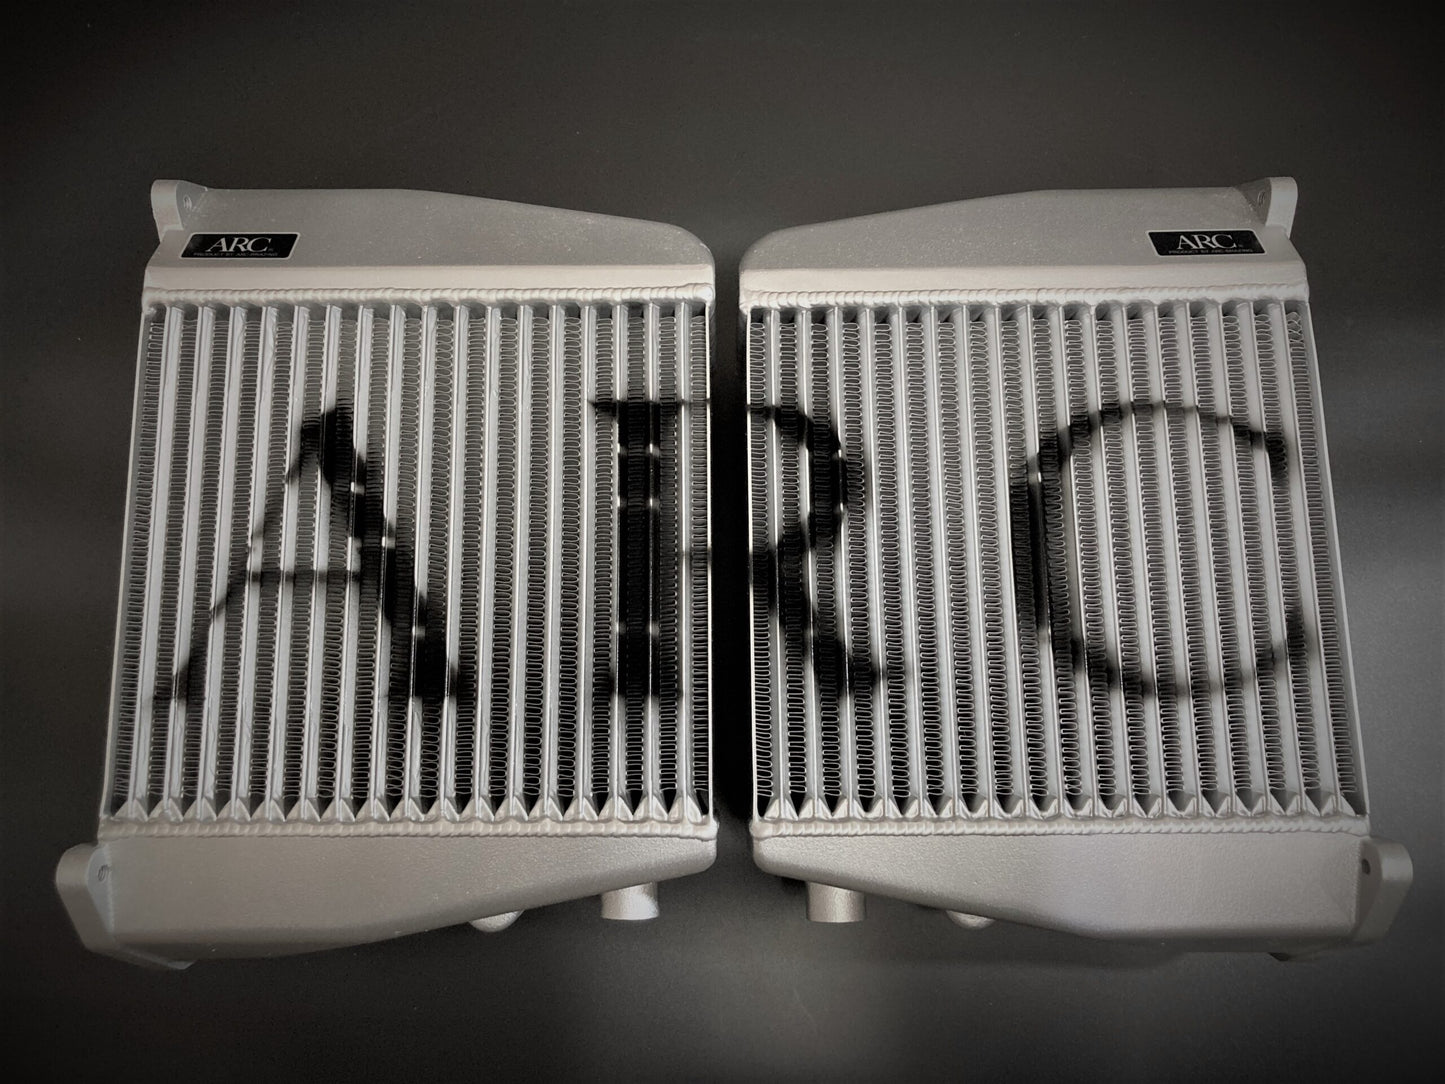 ARC Brazing Intercooler SMIC M109 - GT-R R35 ##140121009